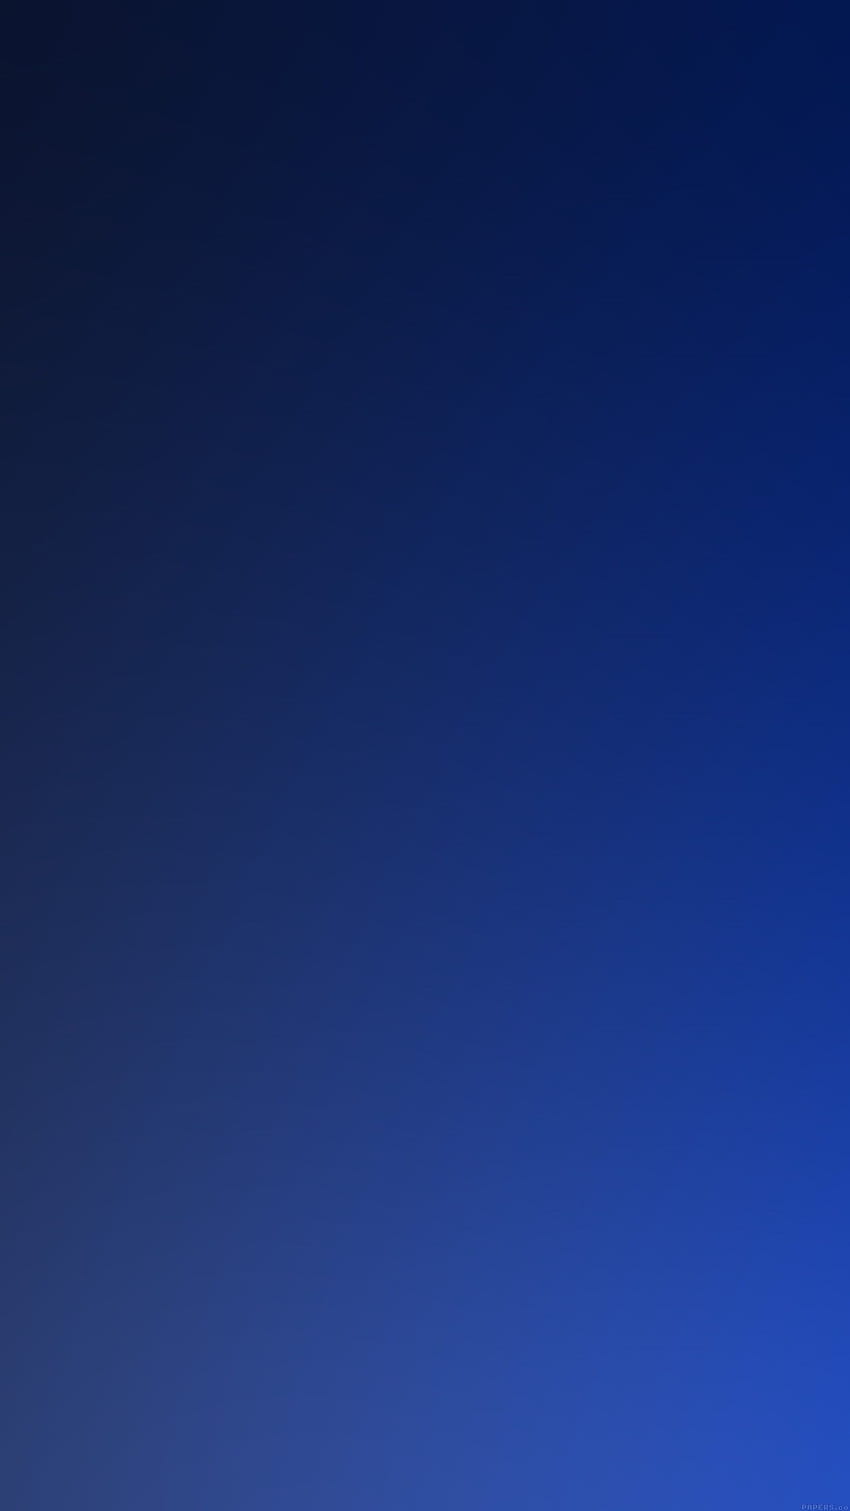 iPhone7papers - dark blue ocean gradation blur HD phone wallpaper